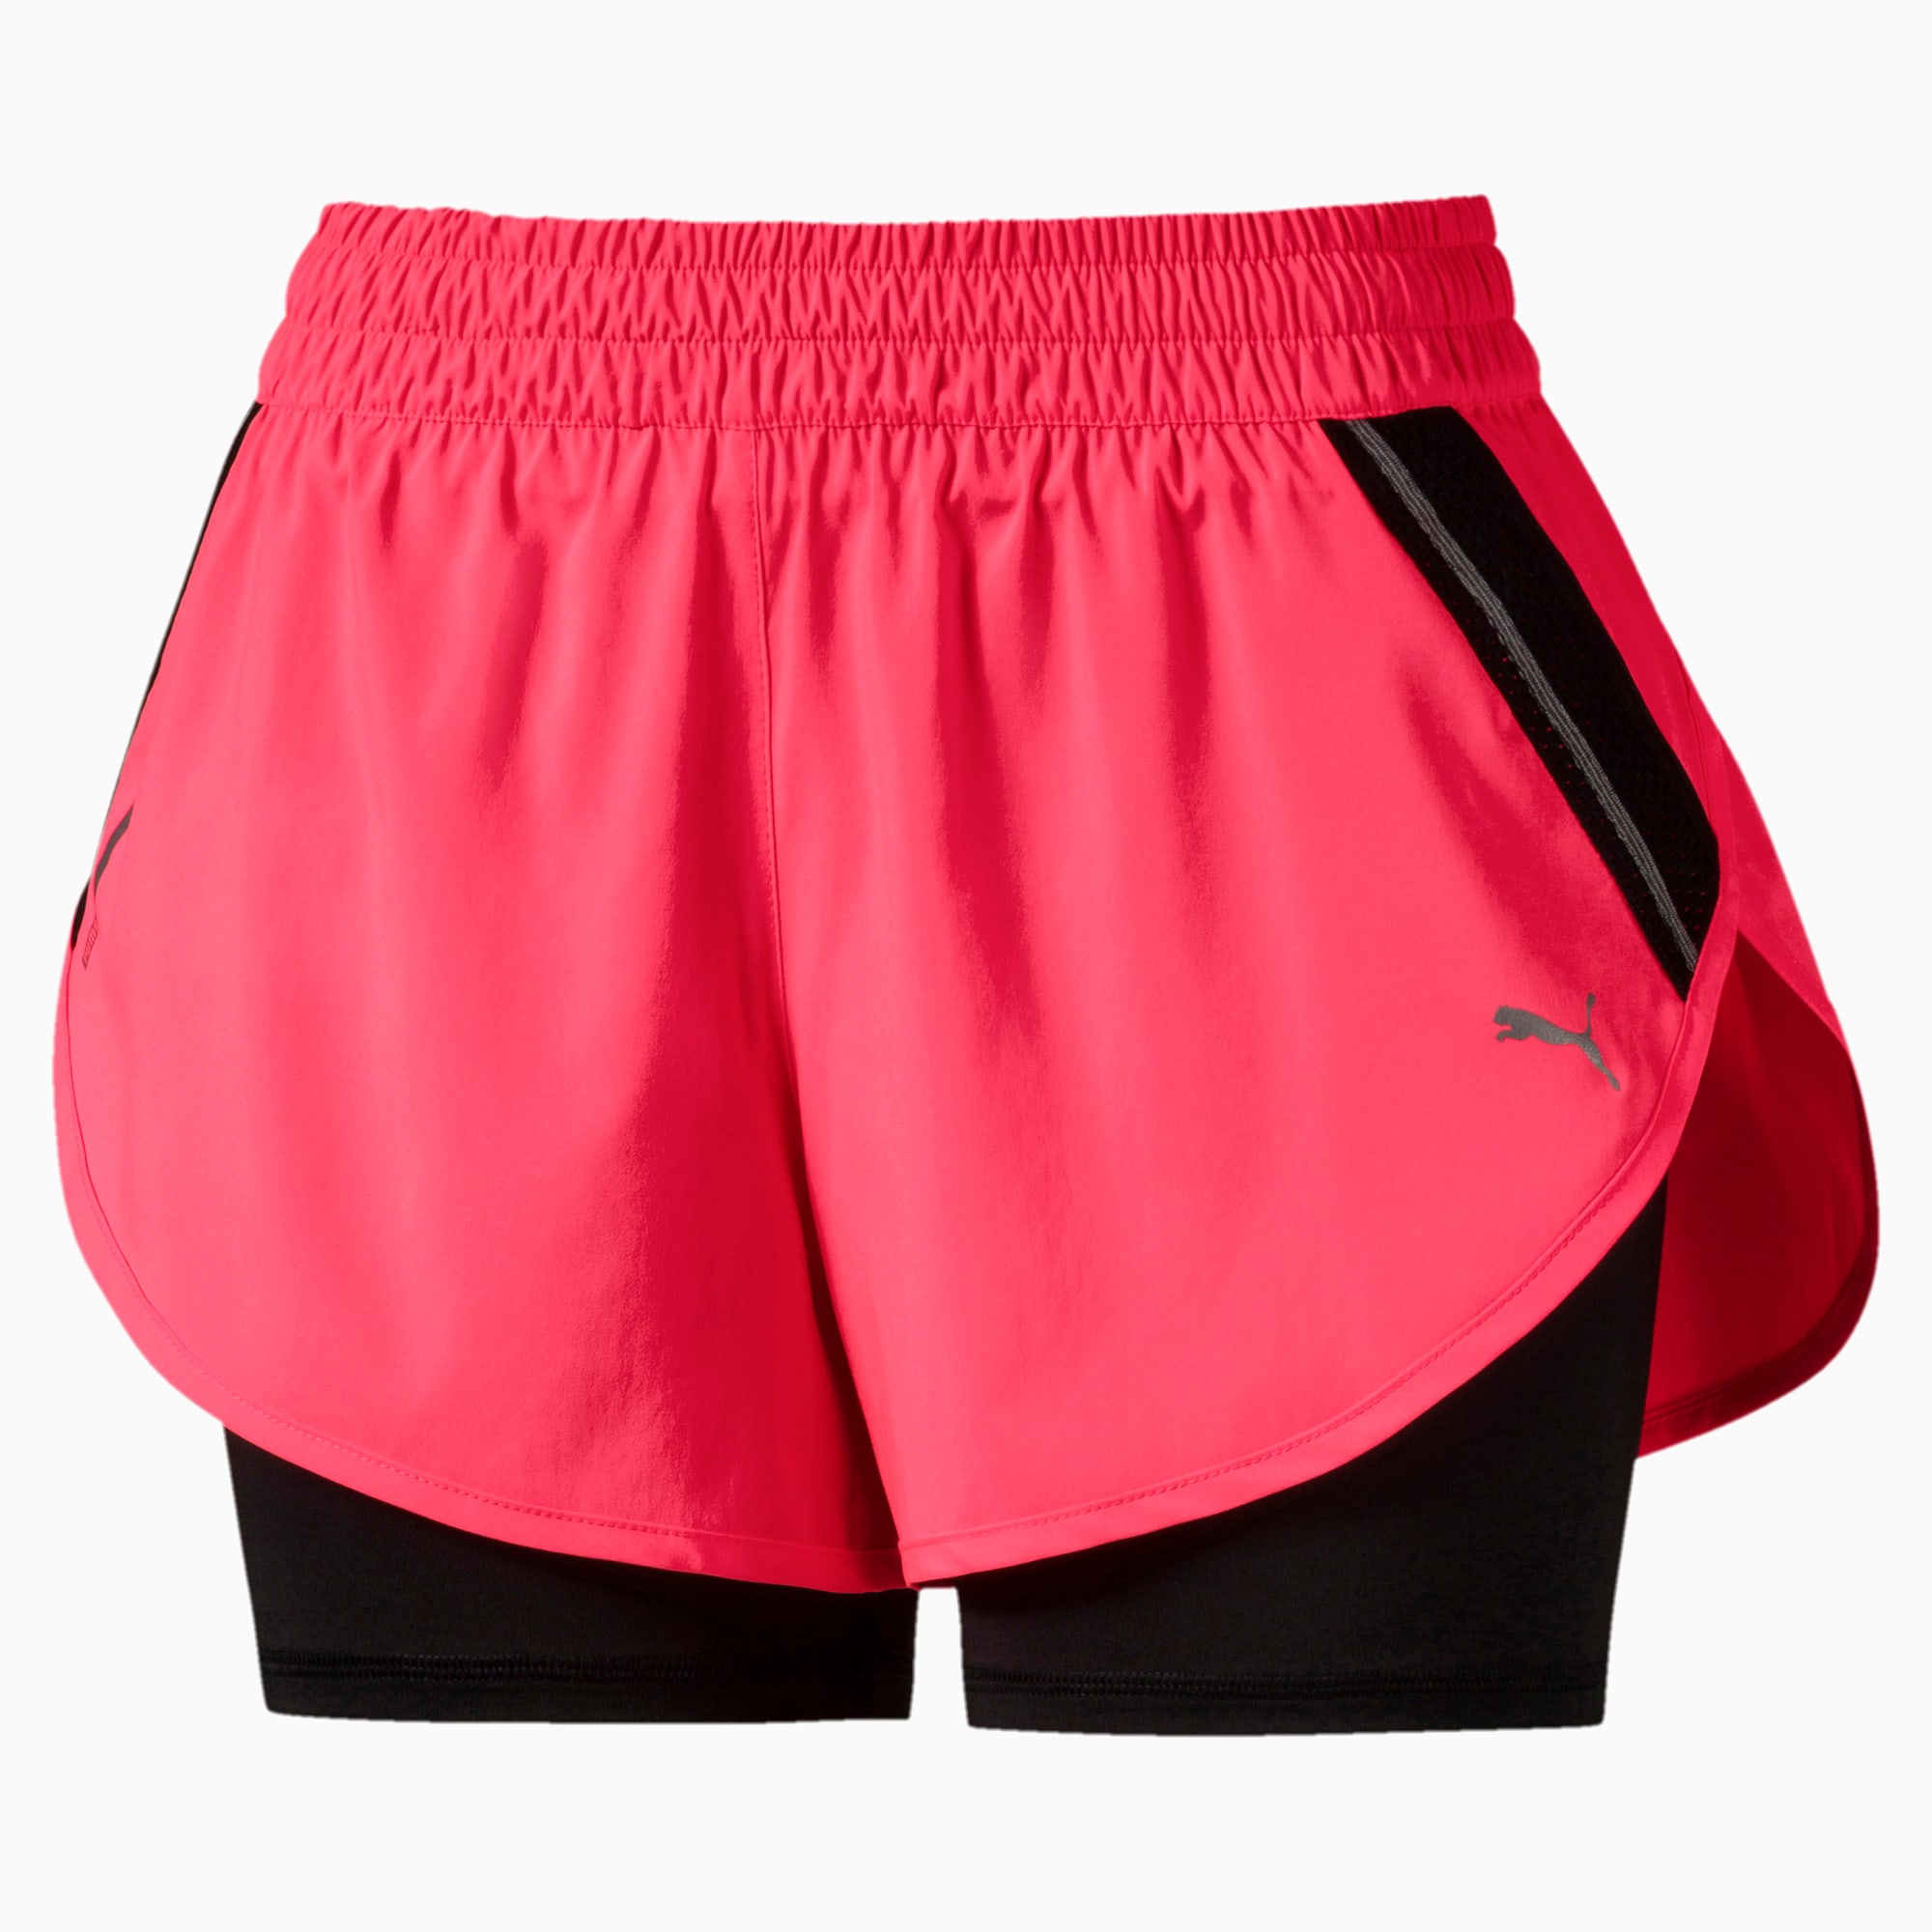 Last Lap Woven 2-in-1 Women's Running Shorts, Pink Alert-Puma Black, large-SEA